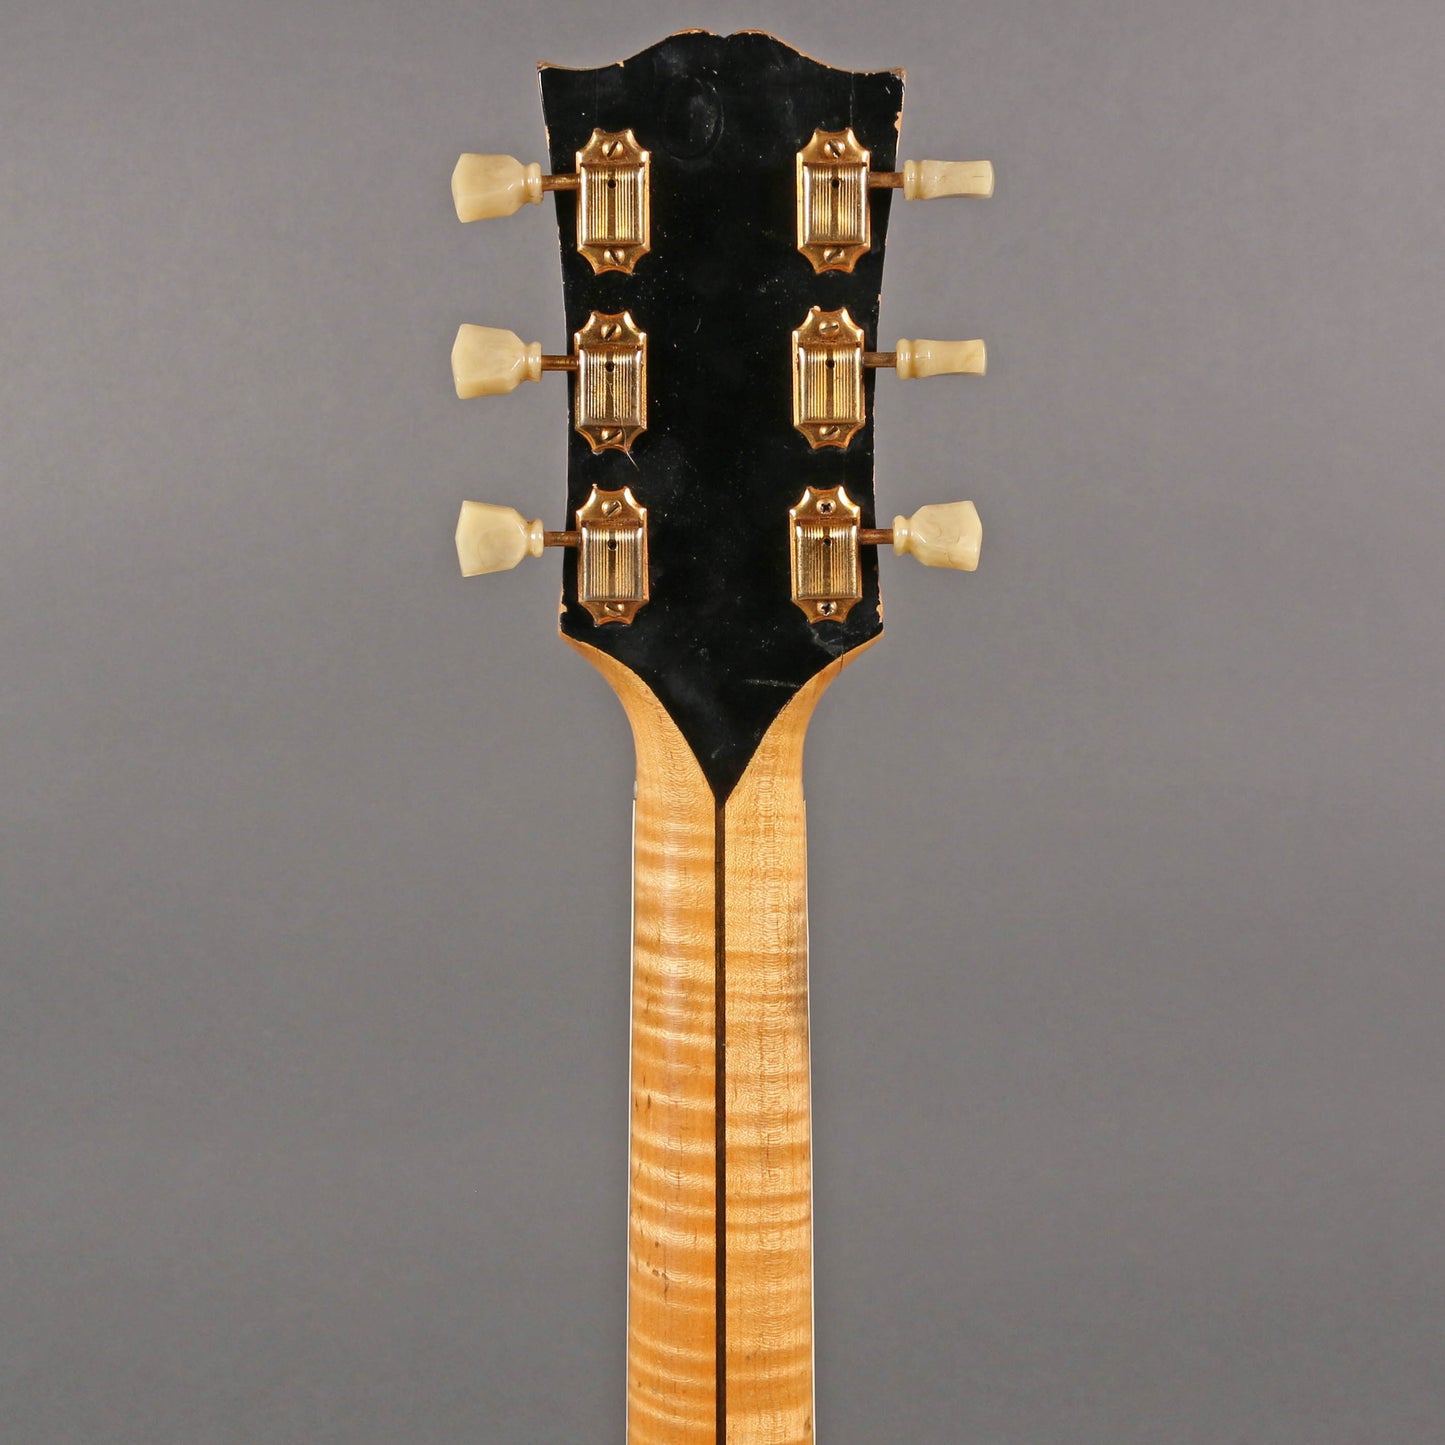 1952 Gibson SJ-200